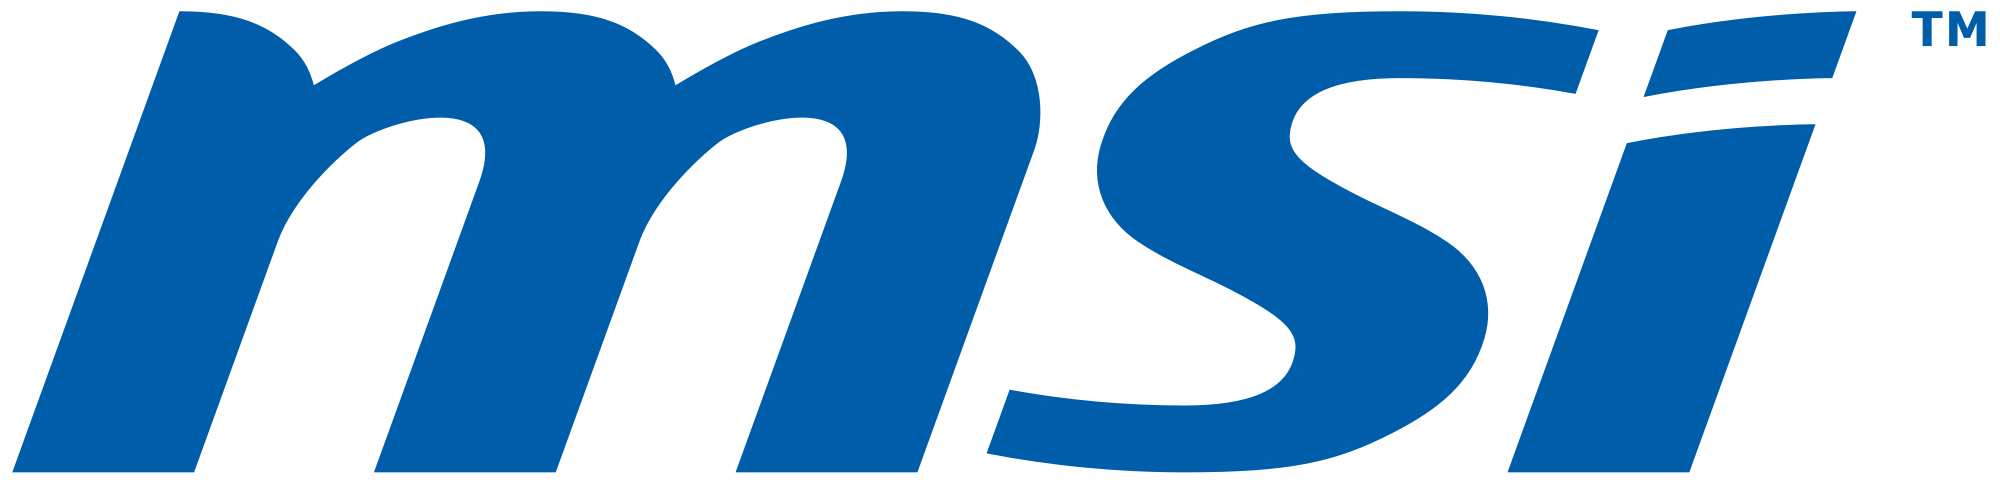 MSI-logo-png